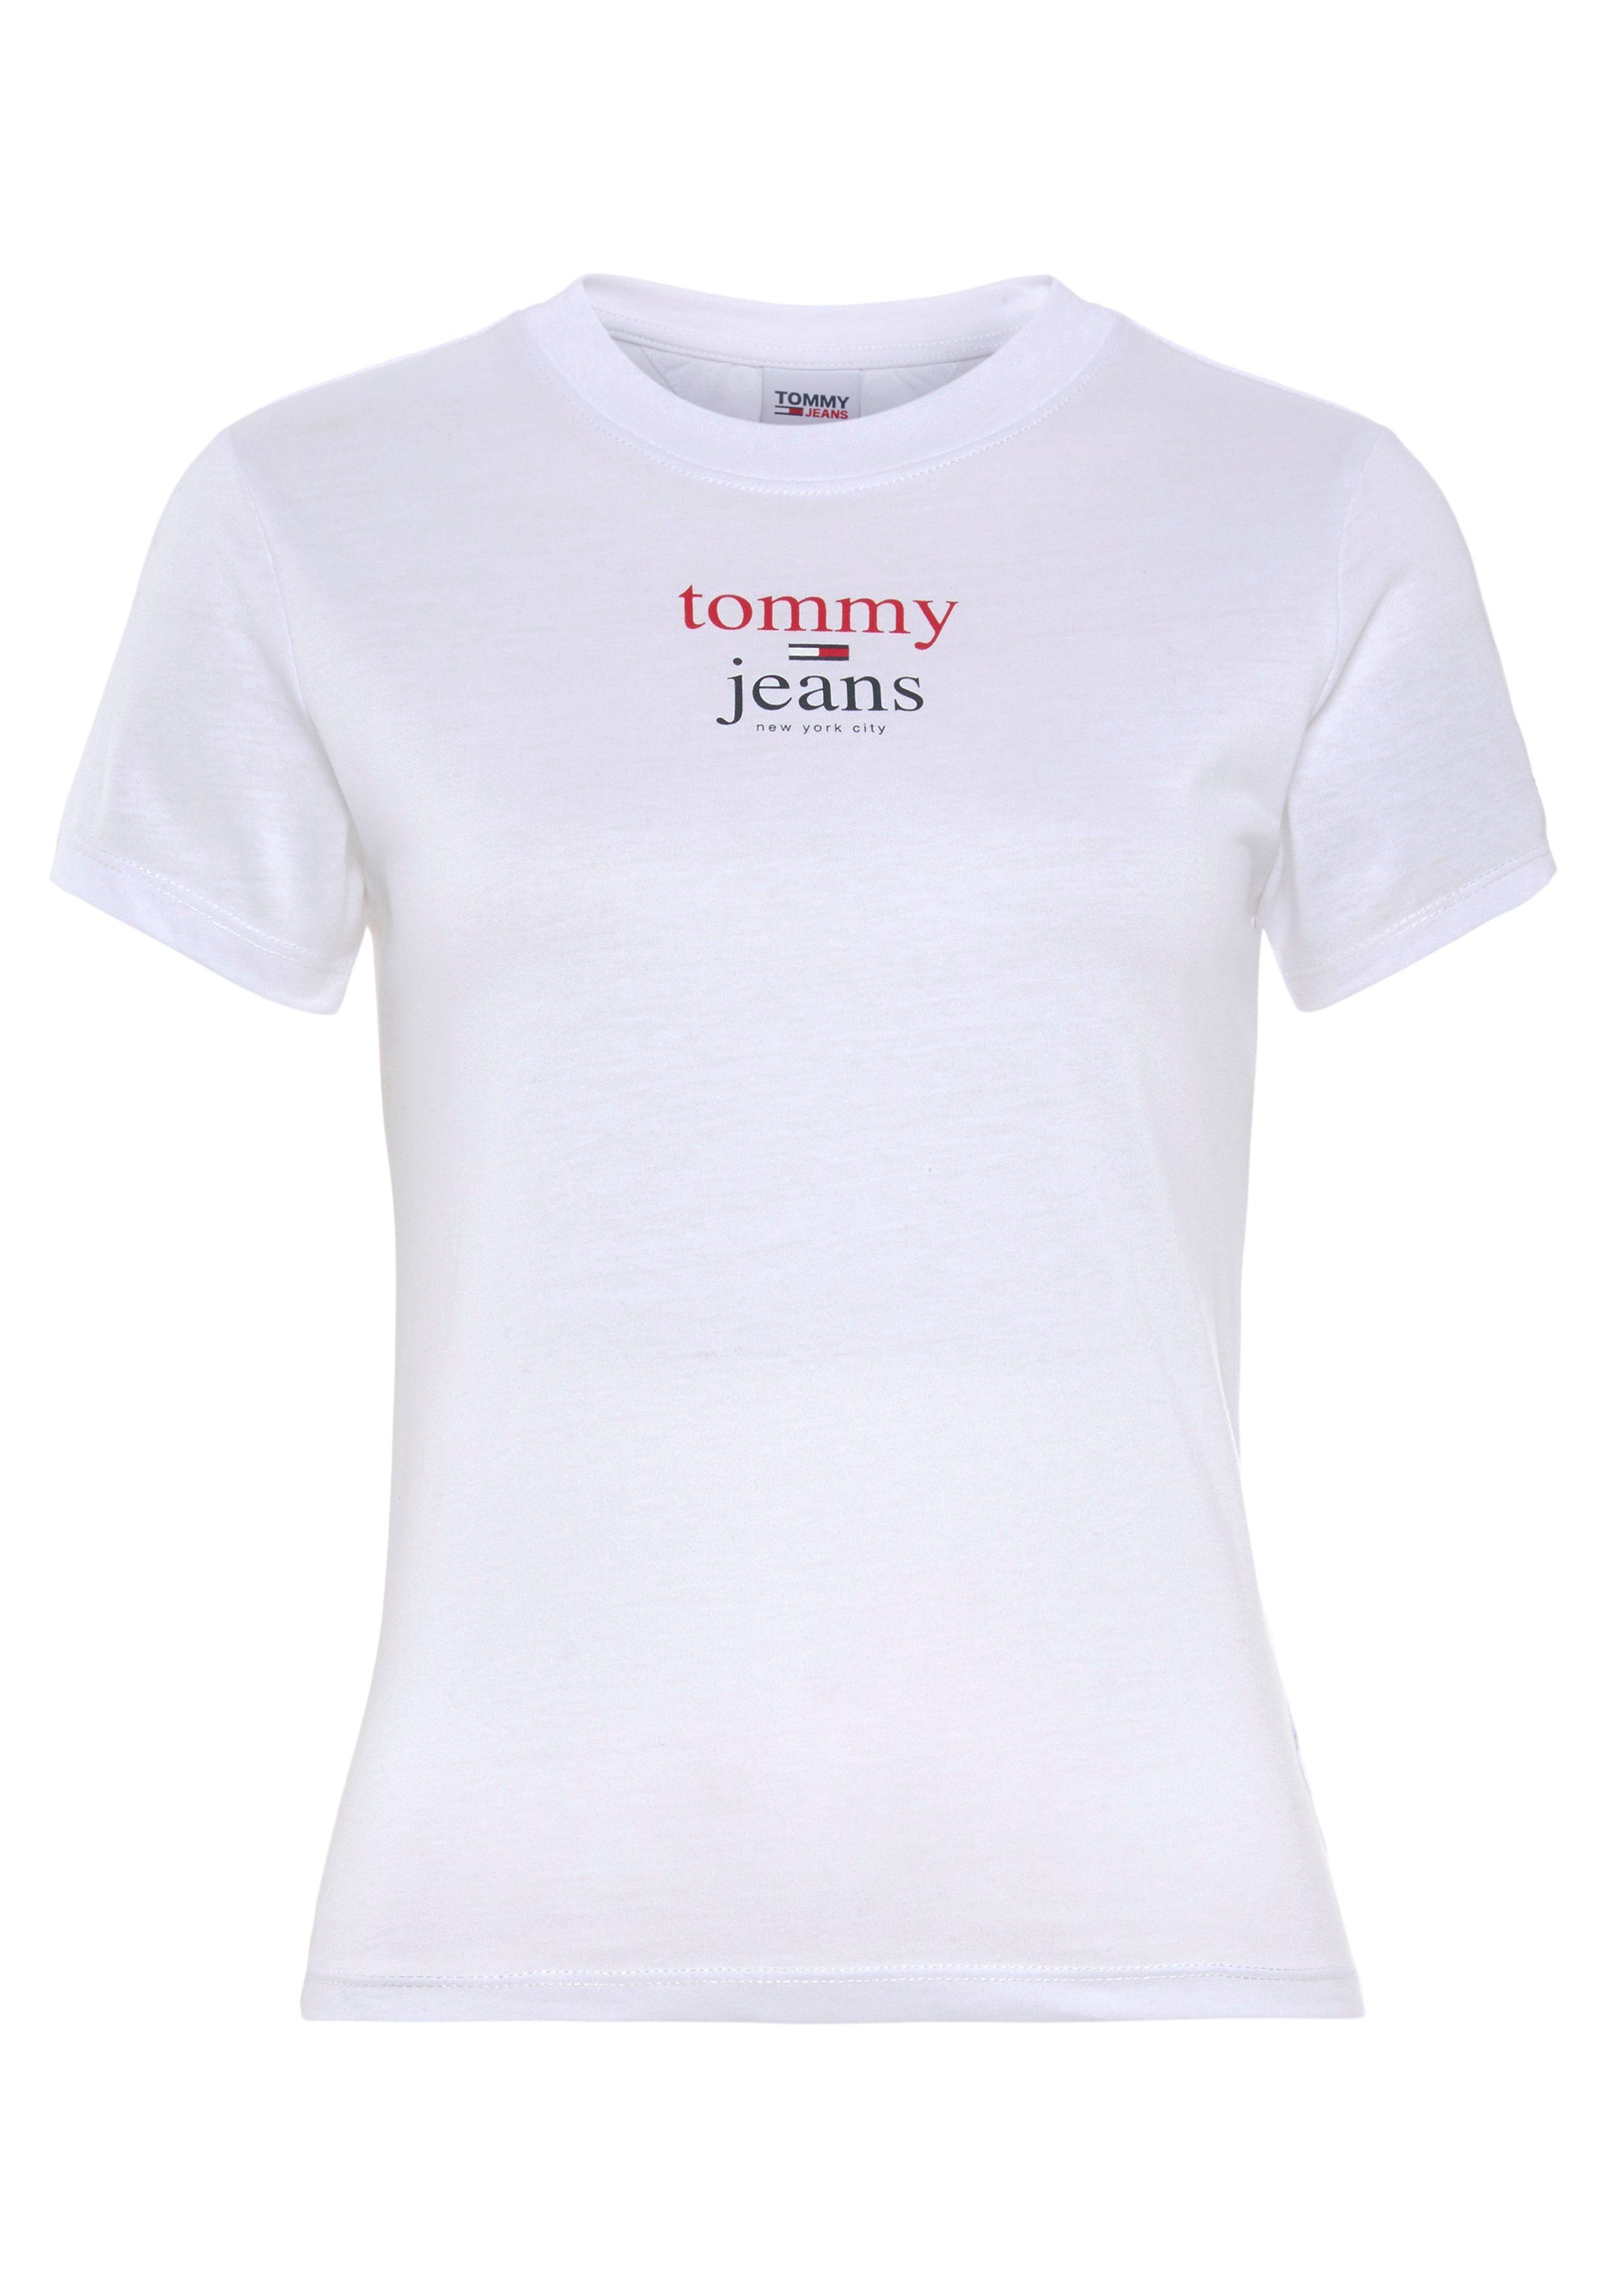 Tommy Jeans Jeans BABY Tommy Schriftzug SS im Kurzarmshirt mit ESSENTIAL Basic-Style TJW LOGO White 2